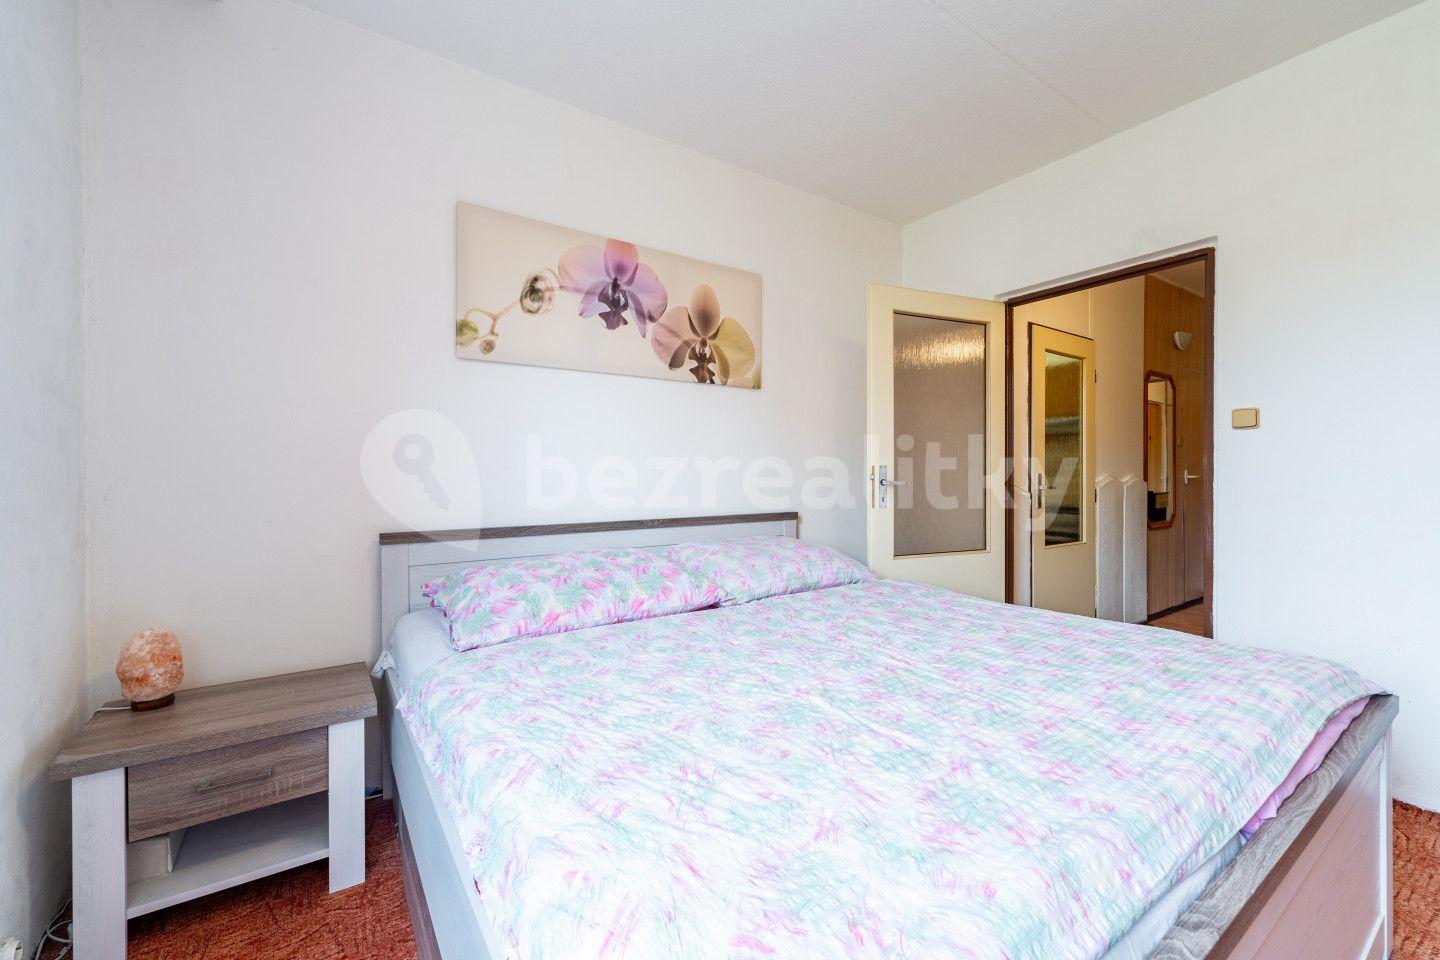 3 bedroom flat for sale, 71 m², Březinova, Jihlava, Vysočina Region